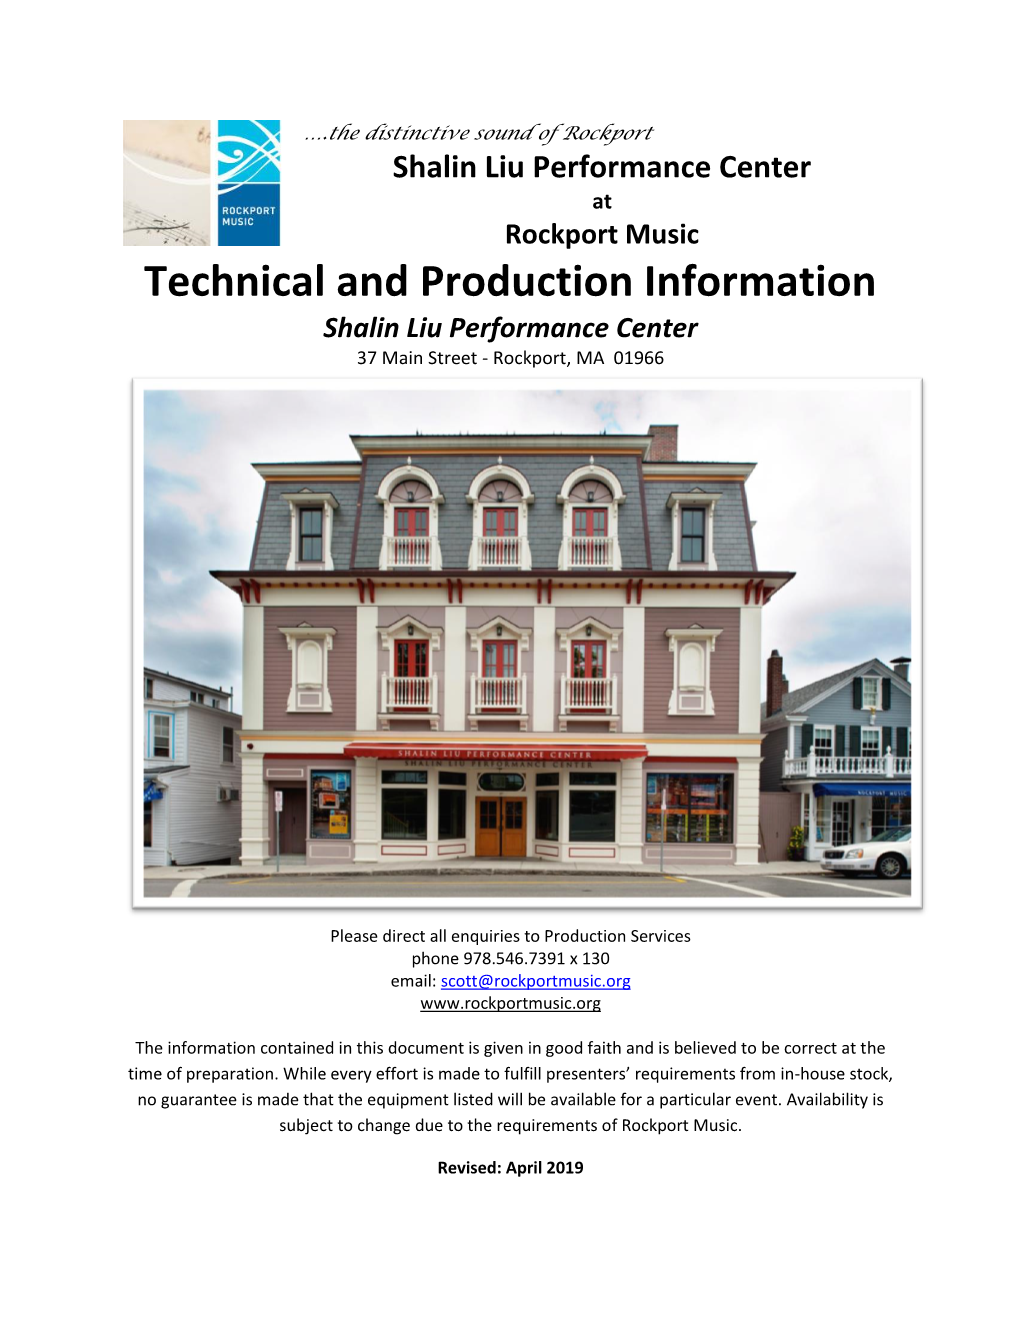 Technical and Production Information Shalin Liu Performance Center 37 Main Street - Rockport, MA 01966